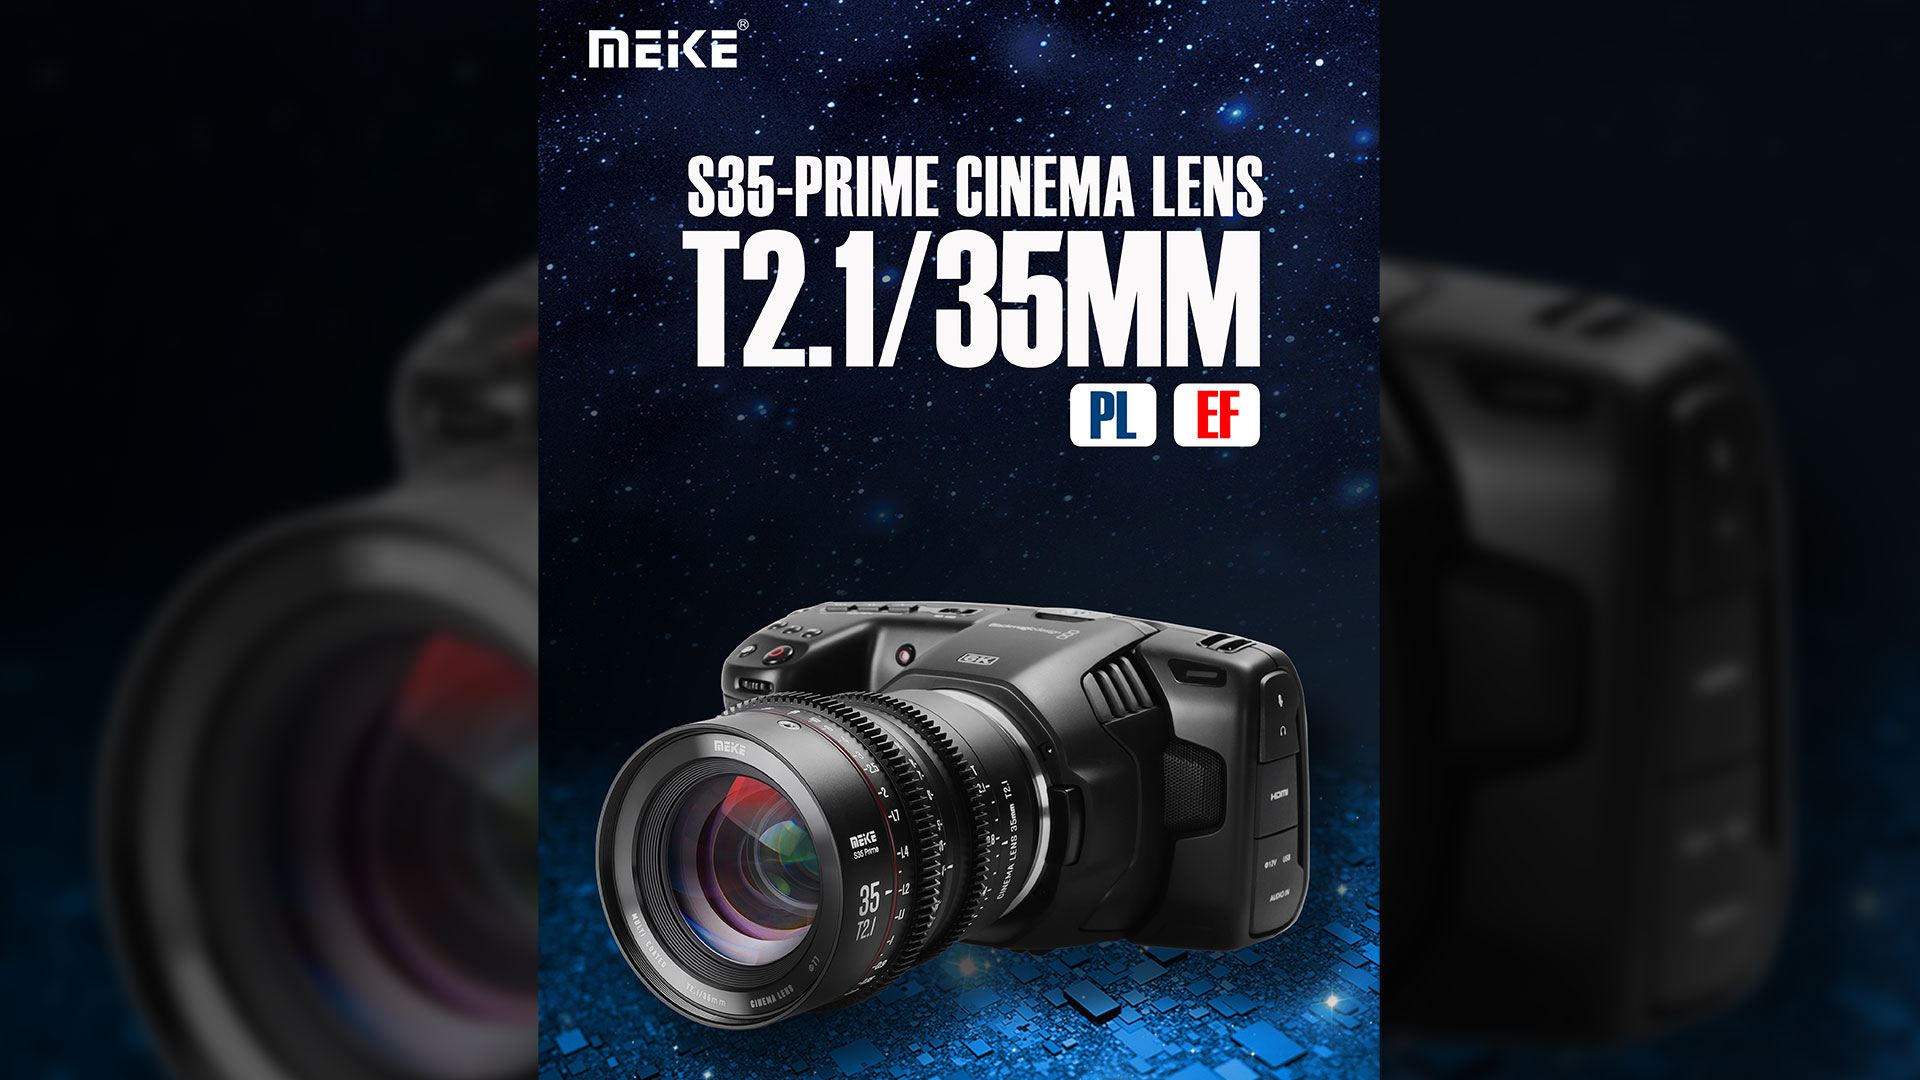 Meikeが35mm T/2.1 S35プライムレンズを発表 | CineD